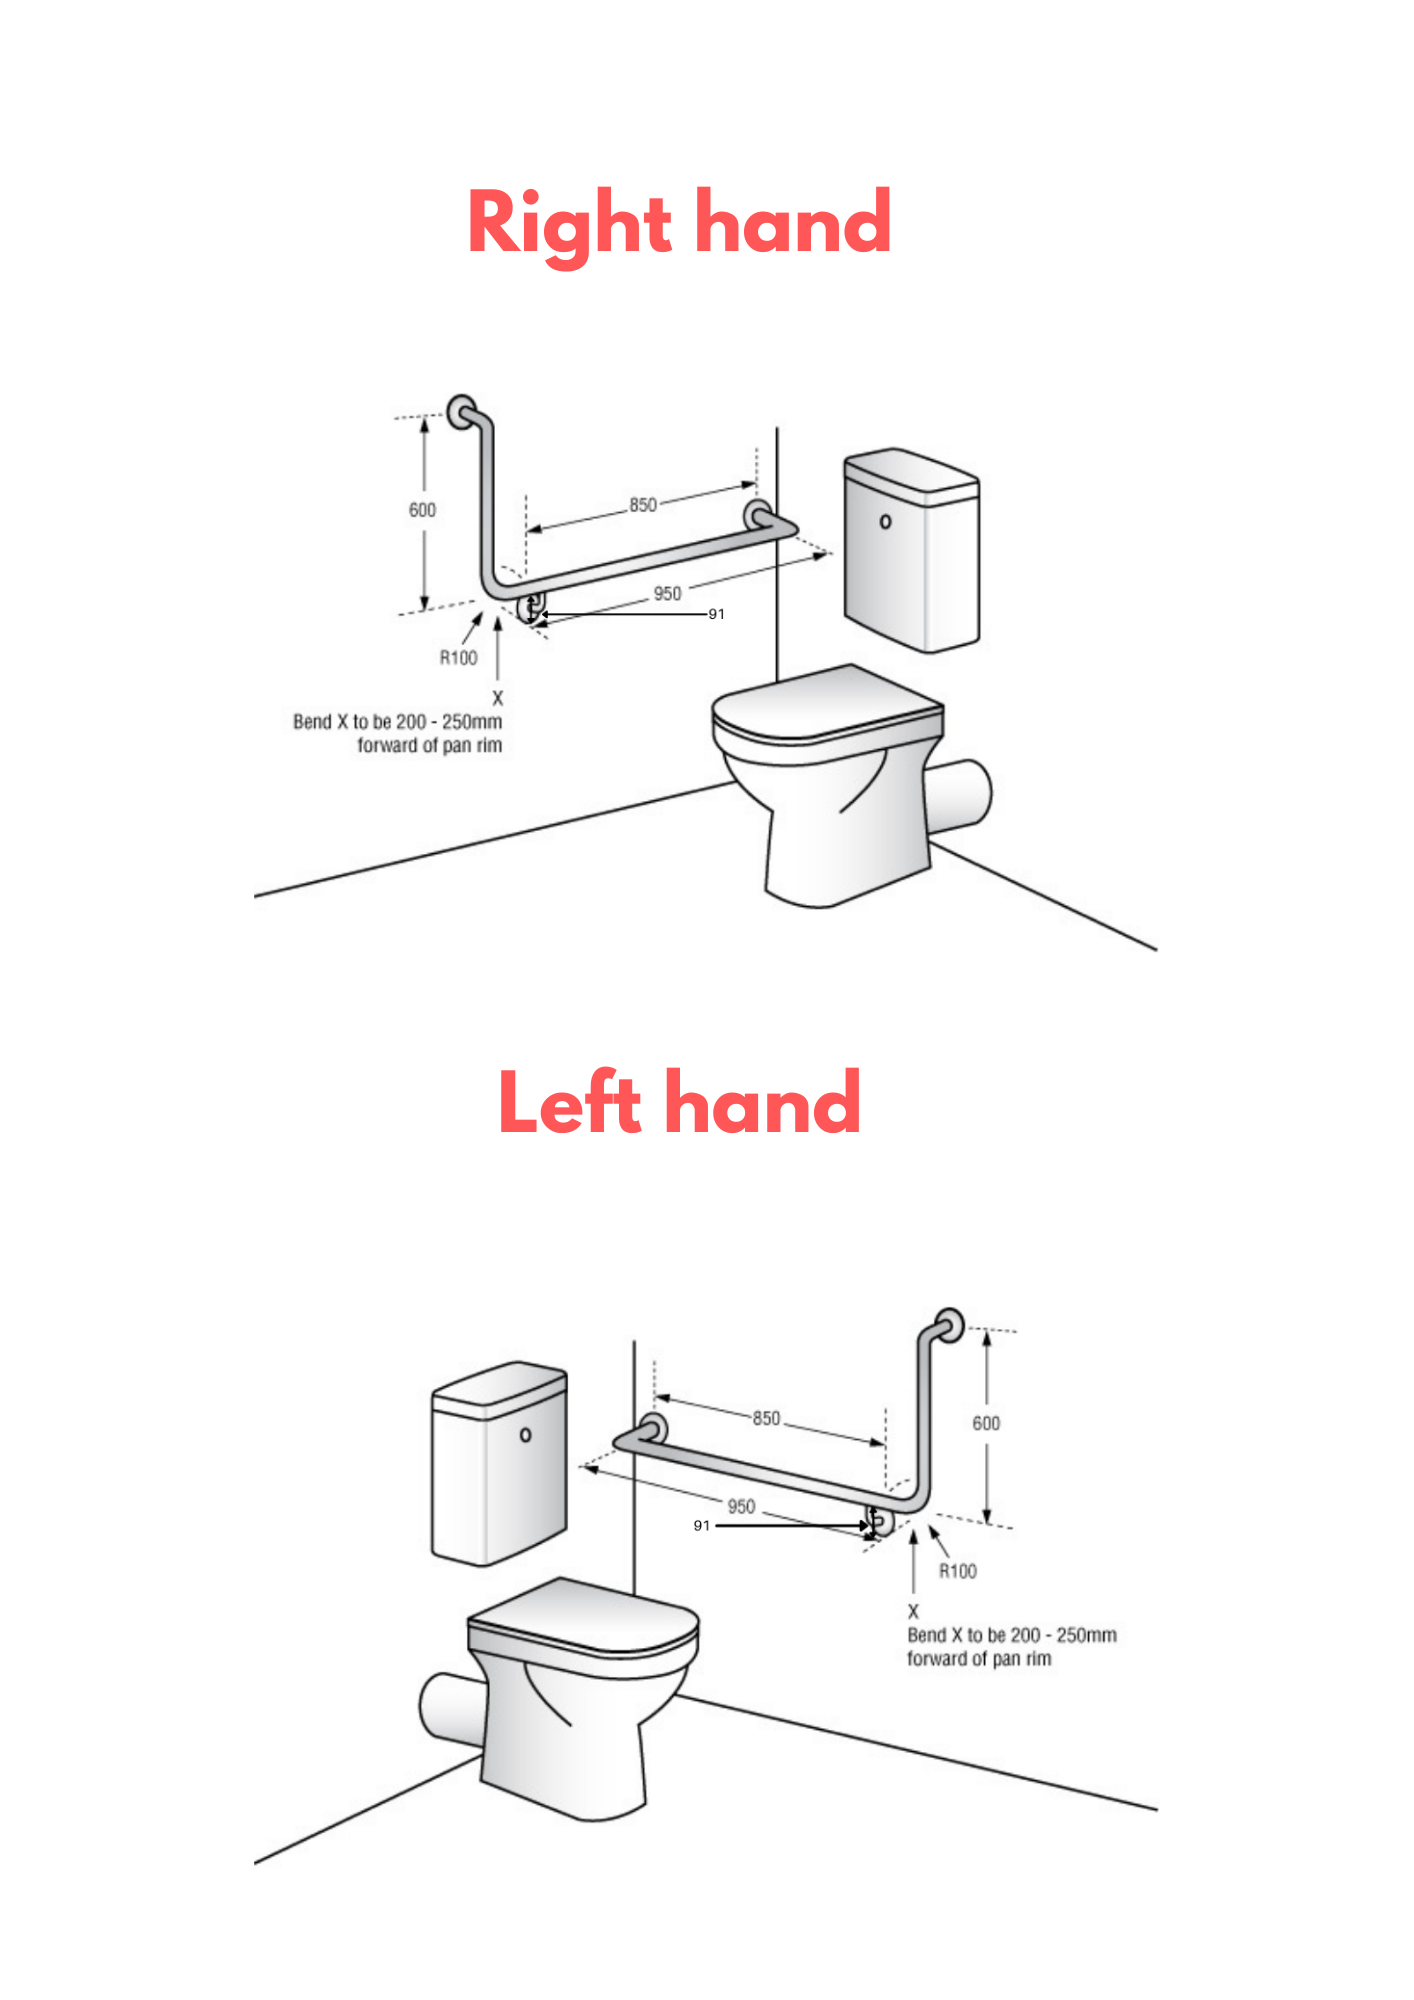 Disabled Bathroom Kit - AS1428.1 COMPLIANT